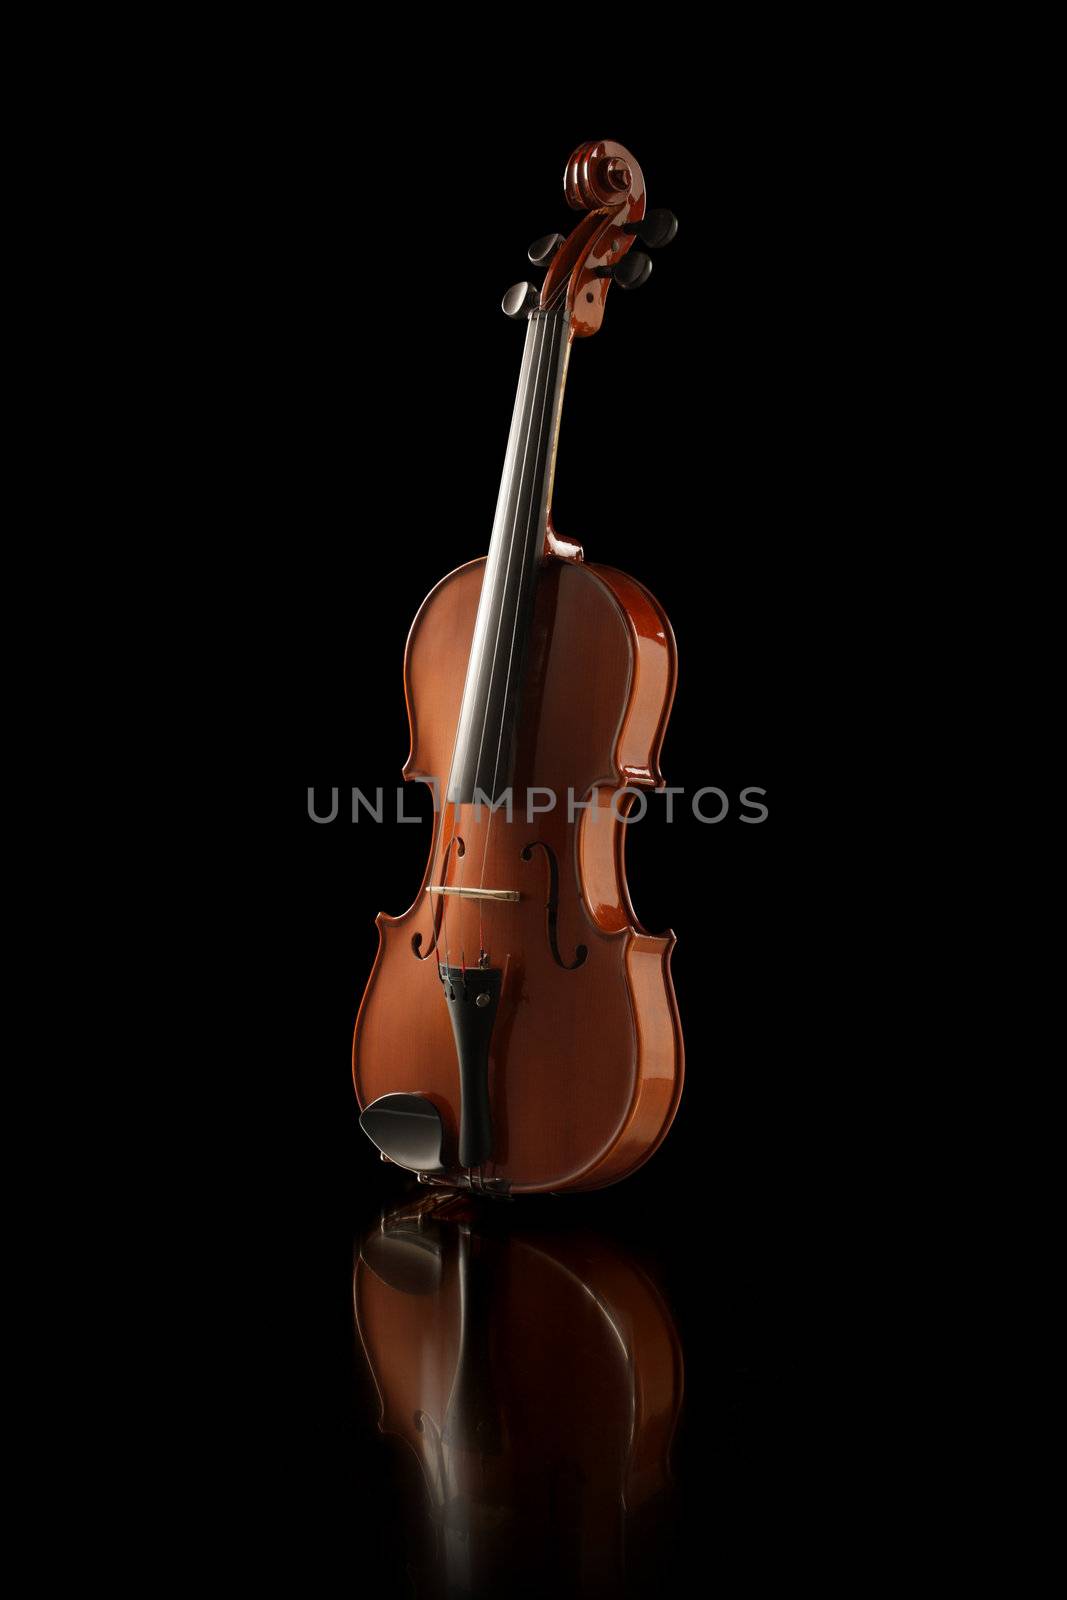 Elegant shot of a violin by stokkete